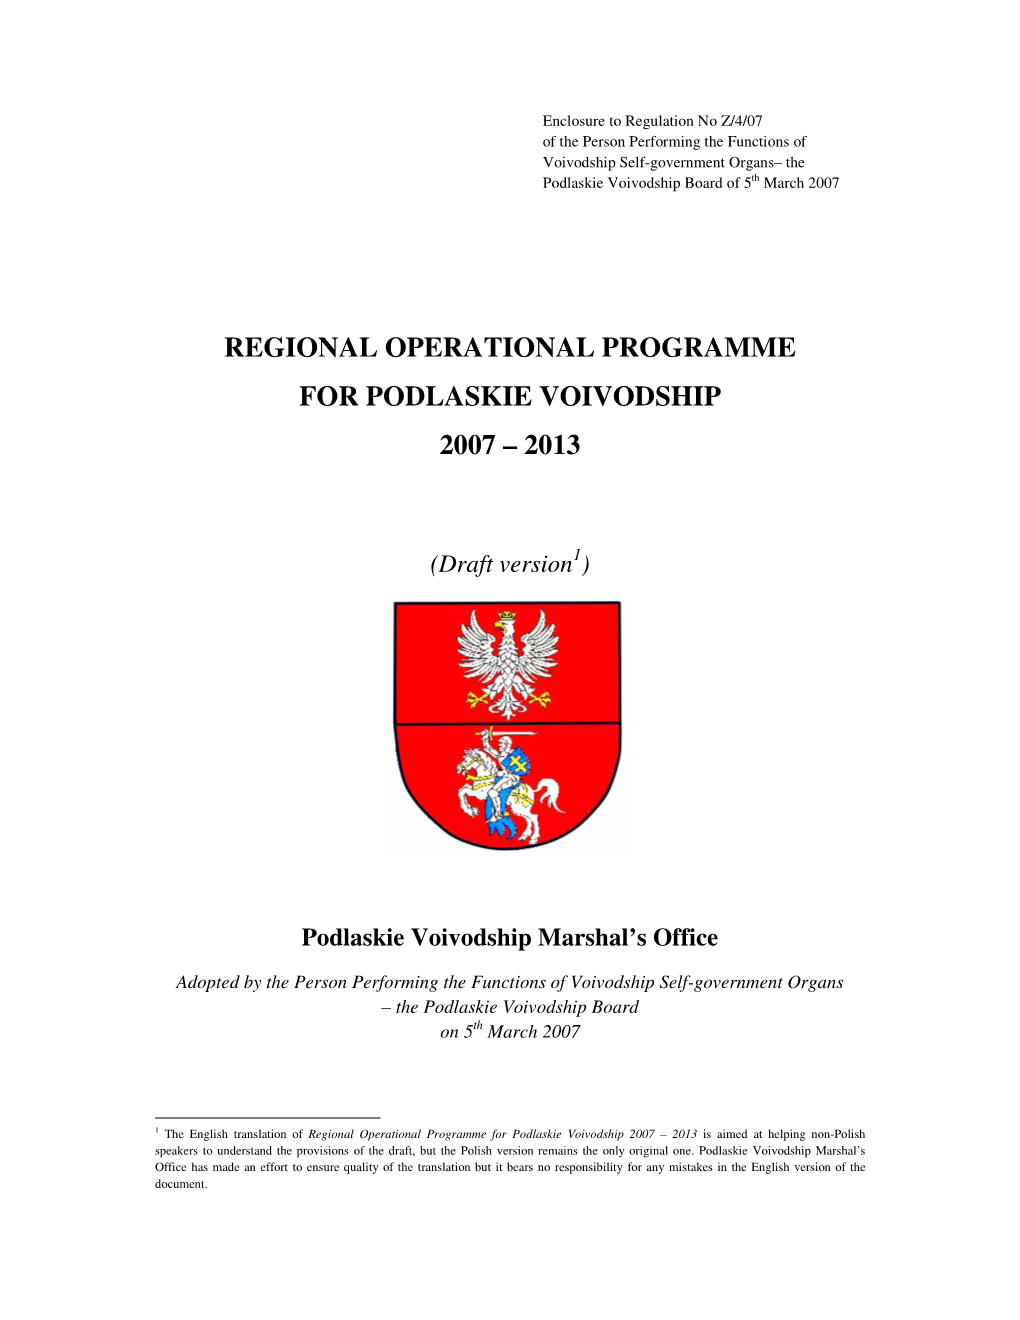 Regional Operational Programme for Podlaskie Voivodship 2007 – 2013